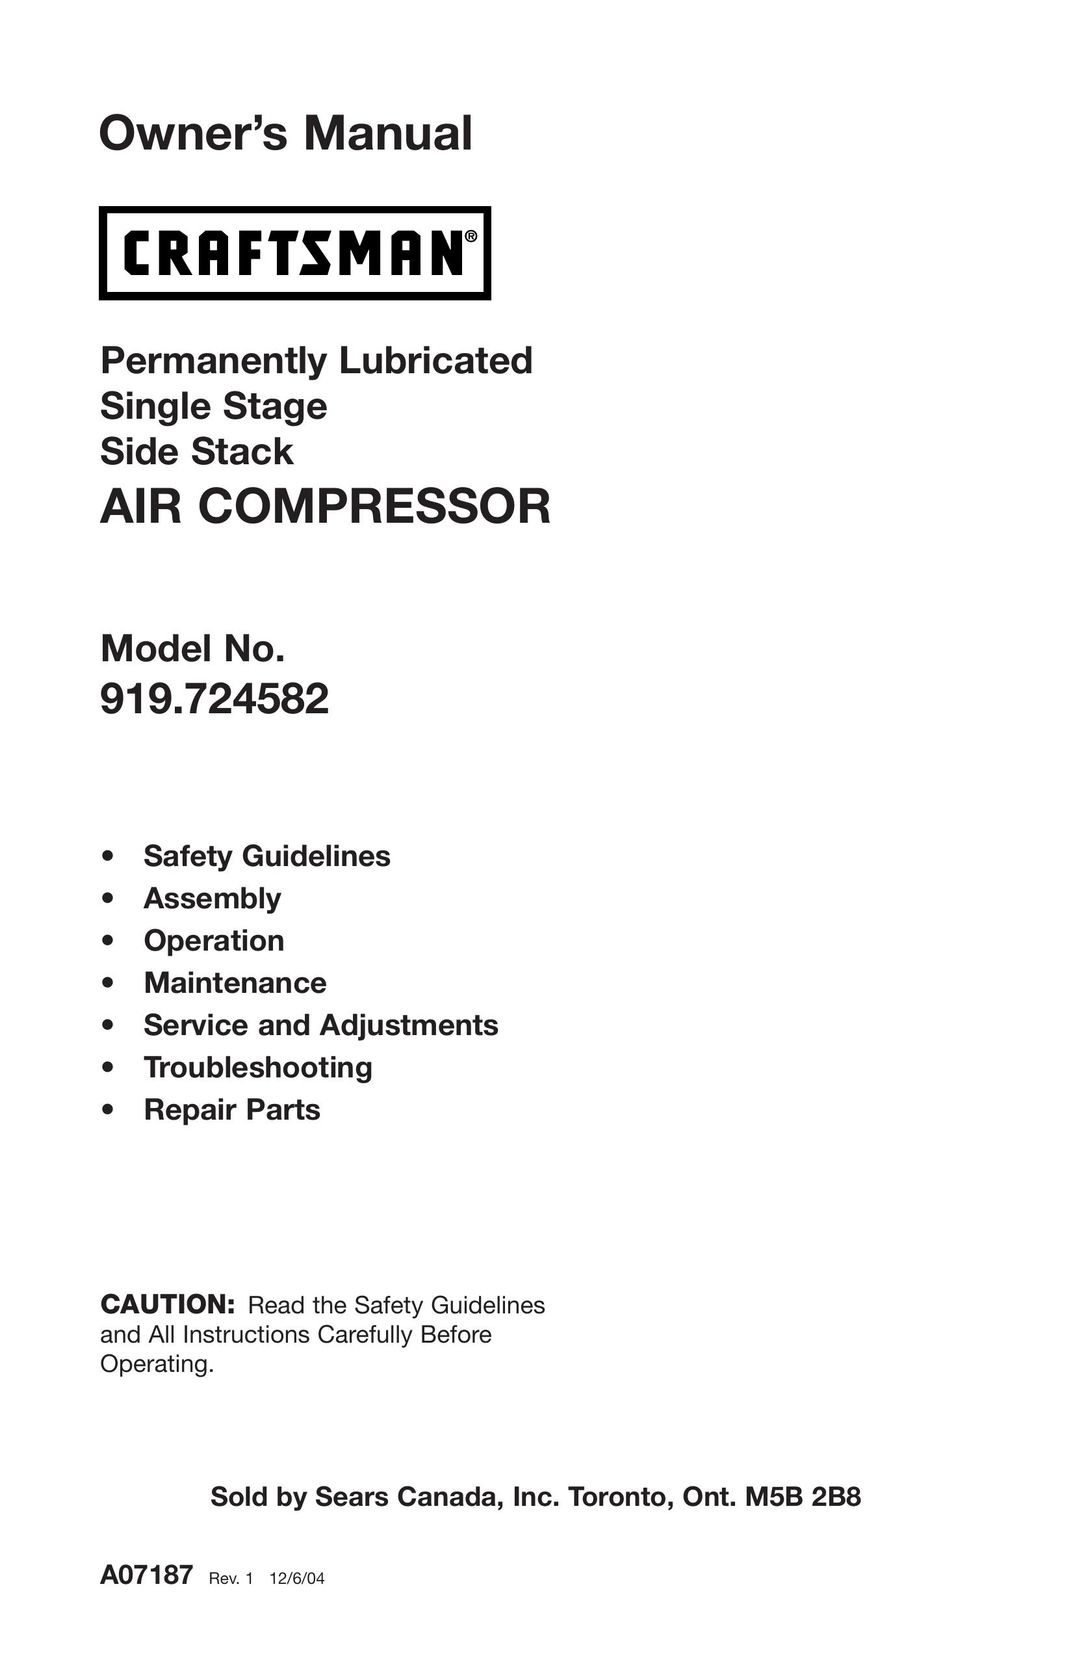 Craftsman 919.724582 Air Compressor User Manual